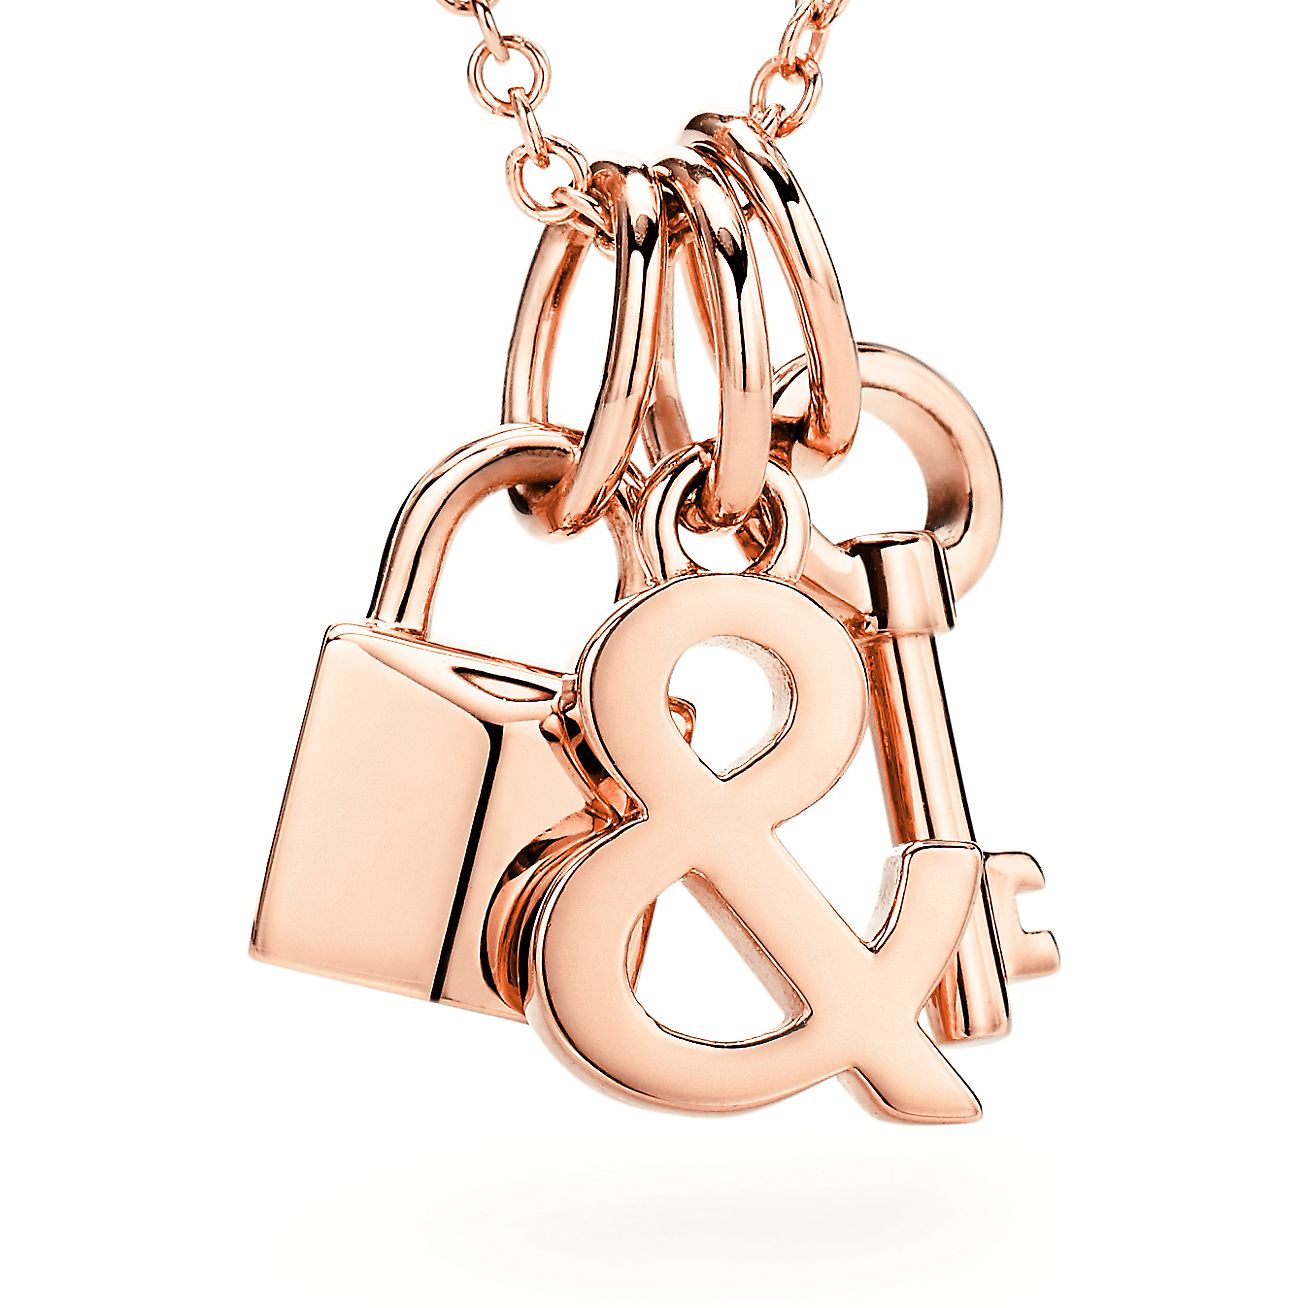 Tiffany \u0026 Love lock and key pendant in 